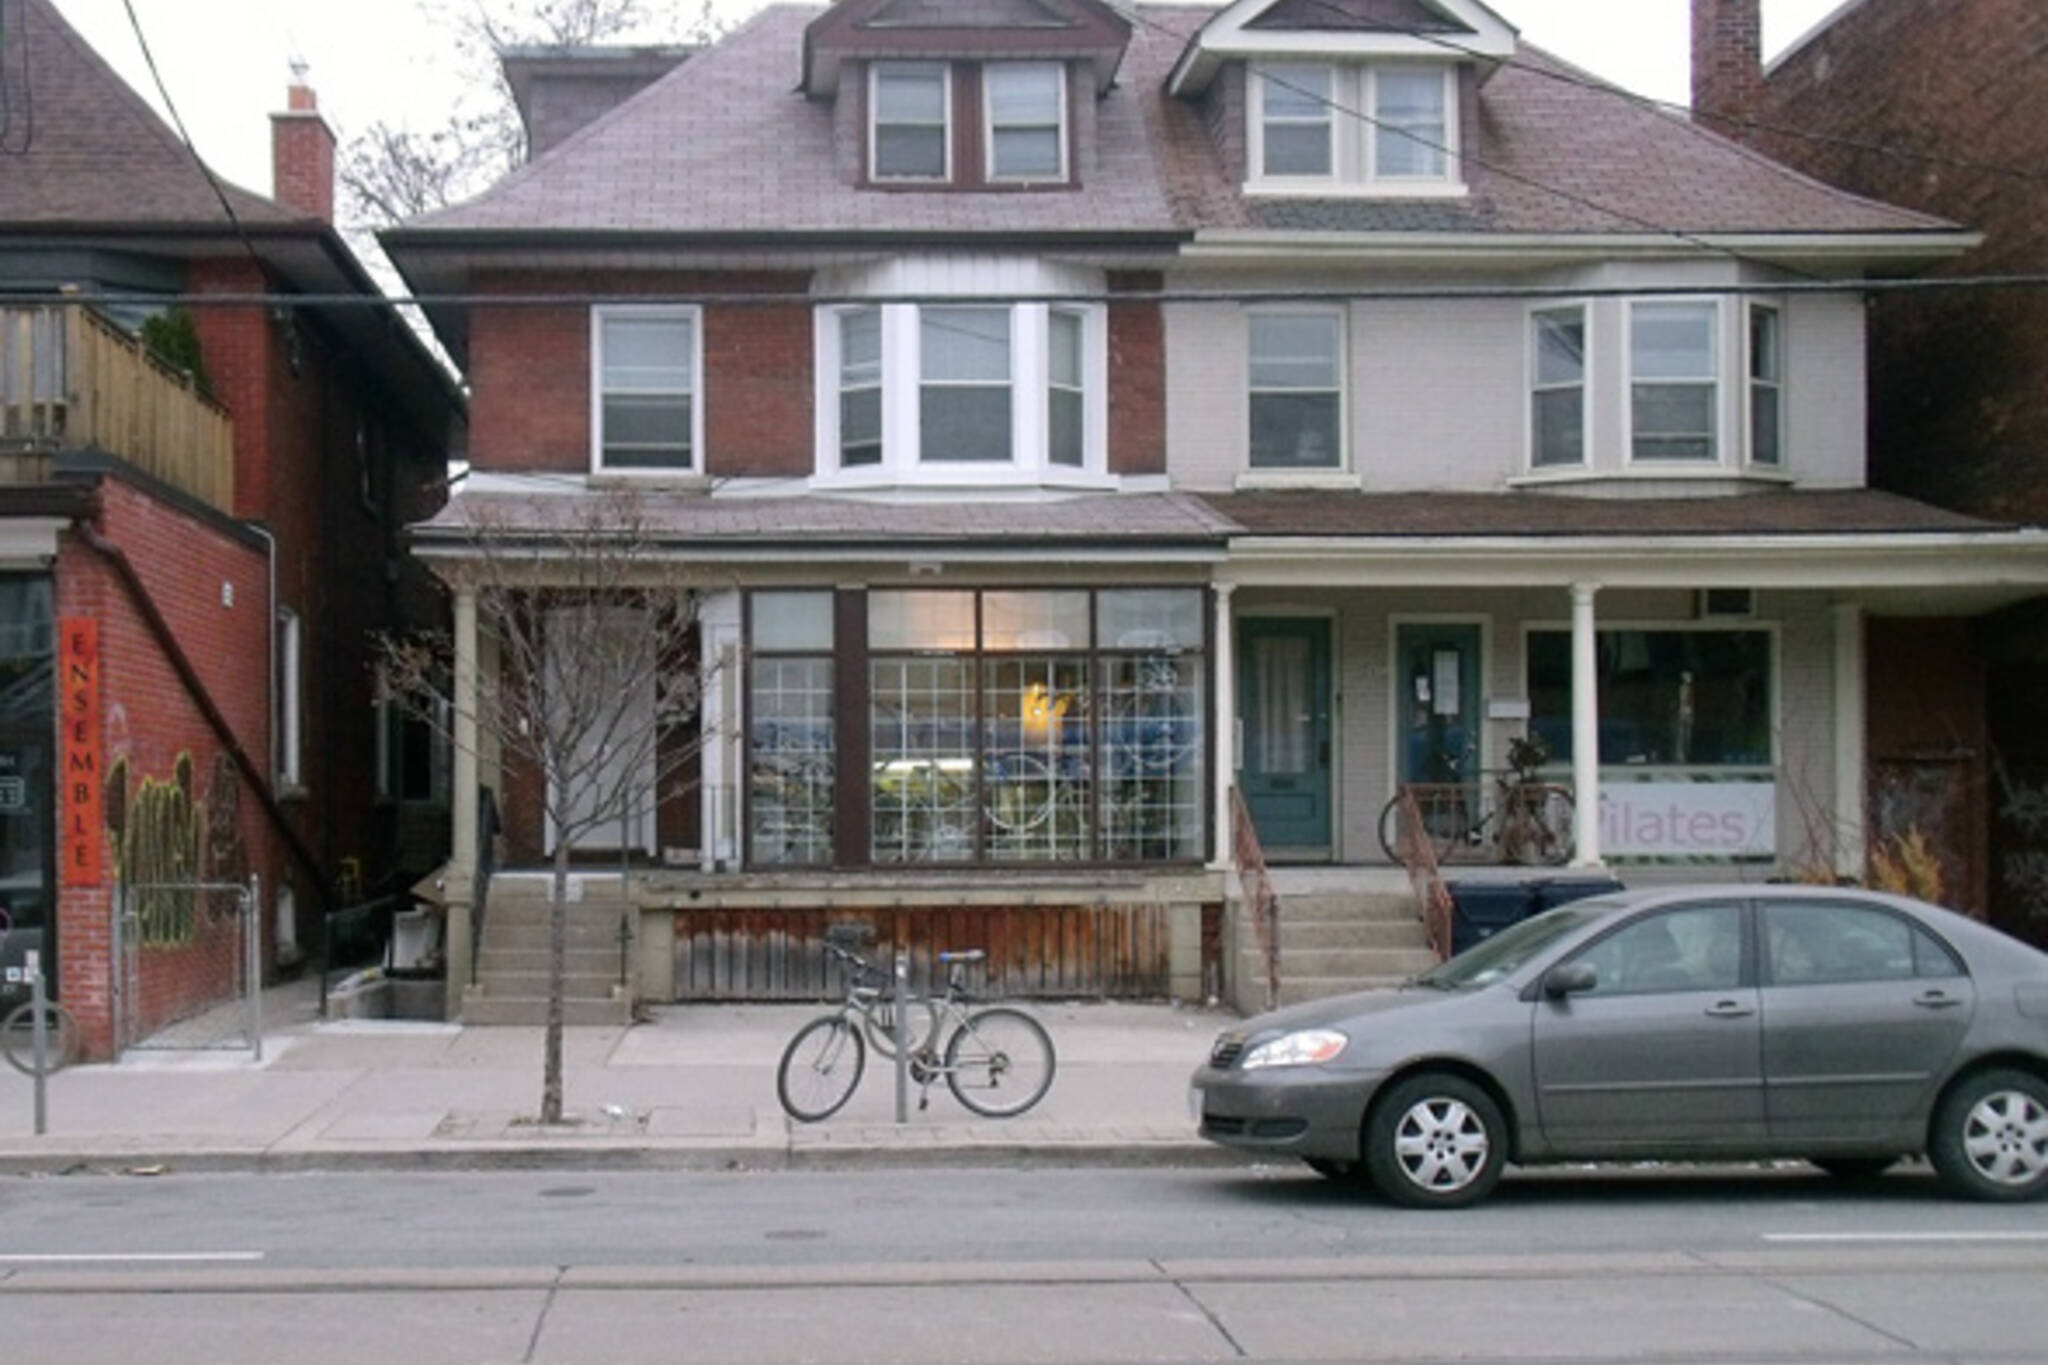 Cam's Place - CLOSED - blogTO - Toronto